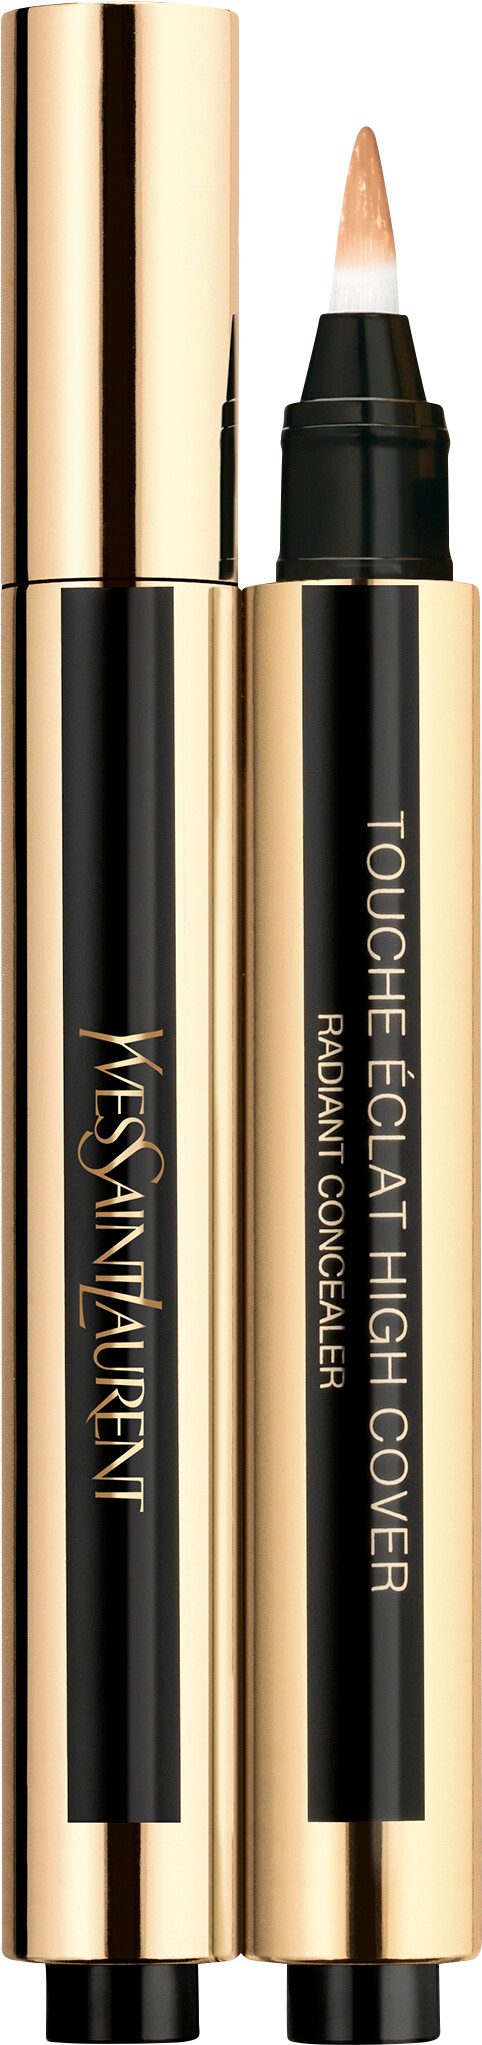 Yves Saint Laurent Touche Eclat High Cover Radiant Concealer Pen 2.5ml 4.5 - Golden